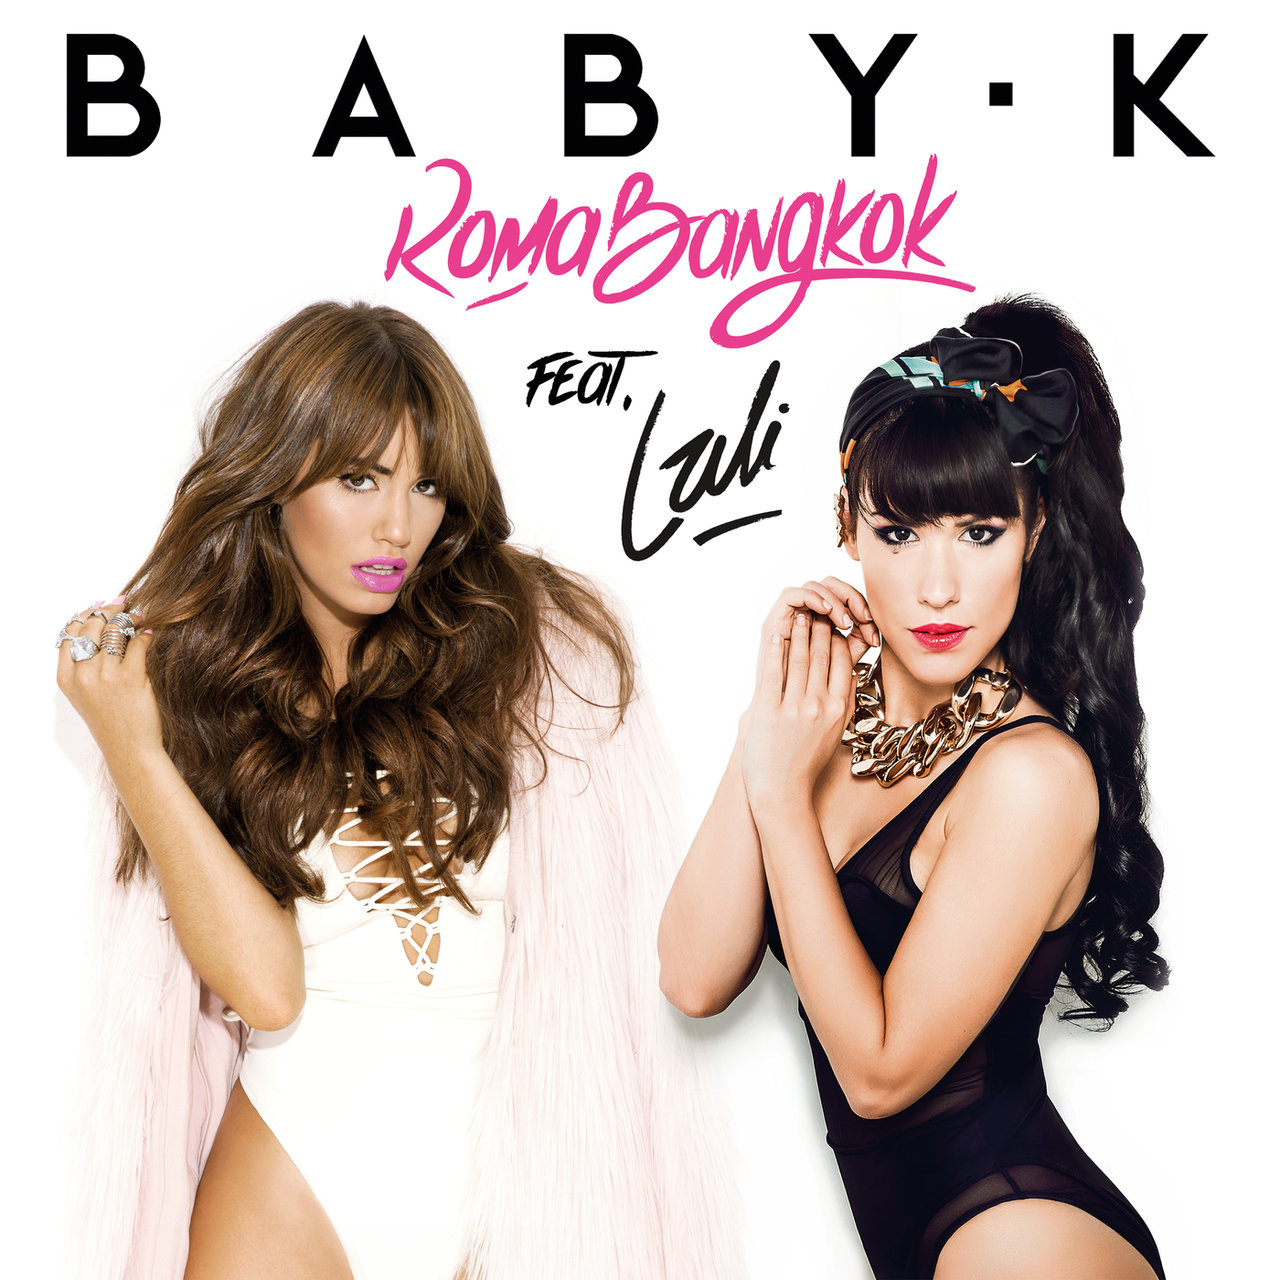 Baby K ft. featuring Lali Roma - Bangkok cover artwork